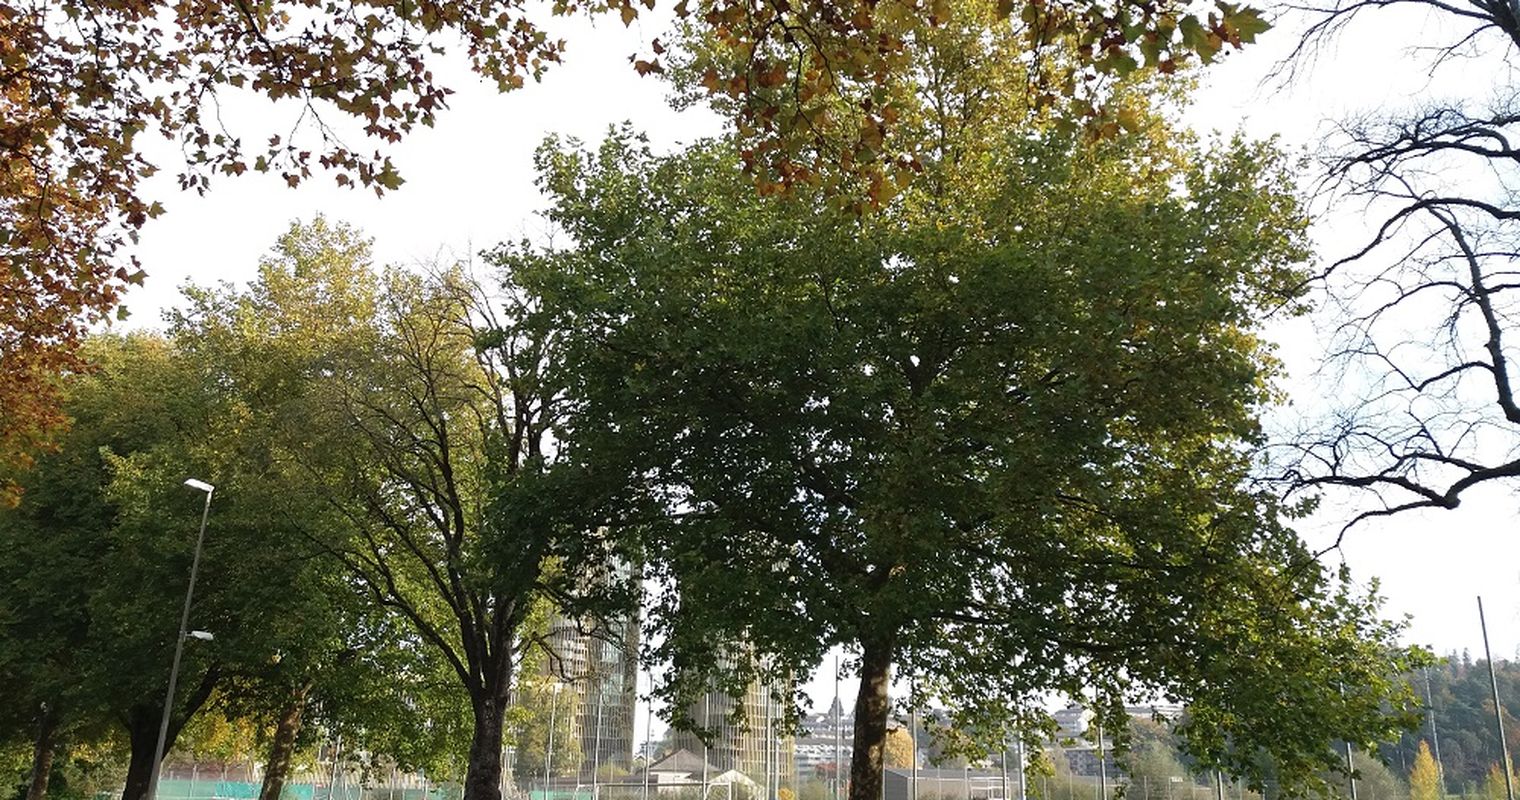 Stadt Luzern muss 105 Bäume fällen